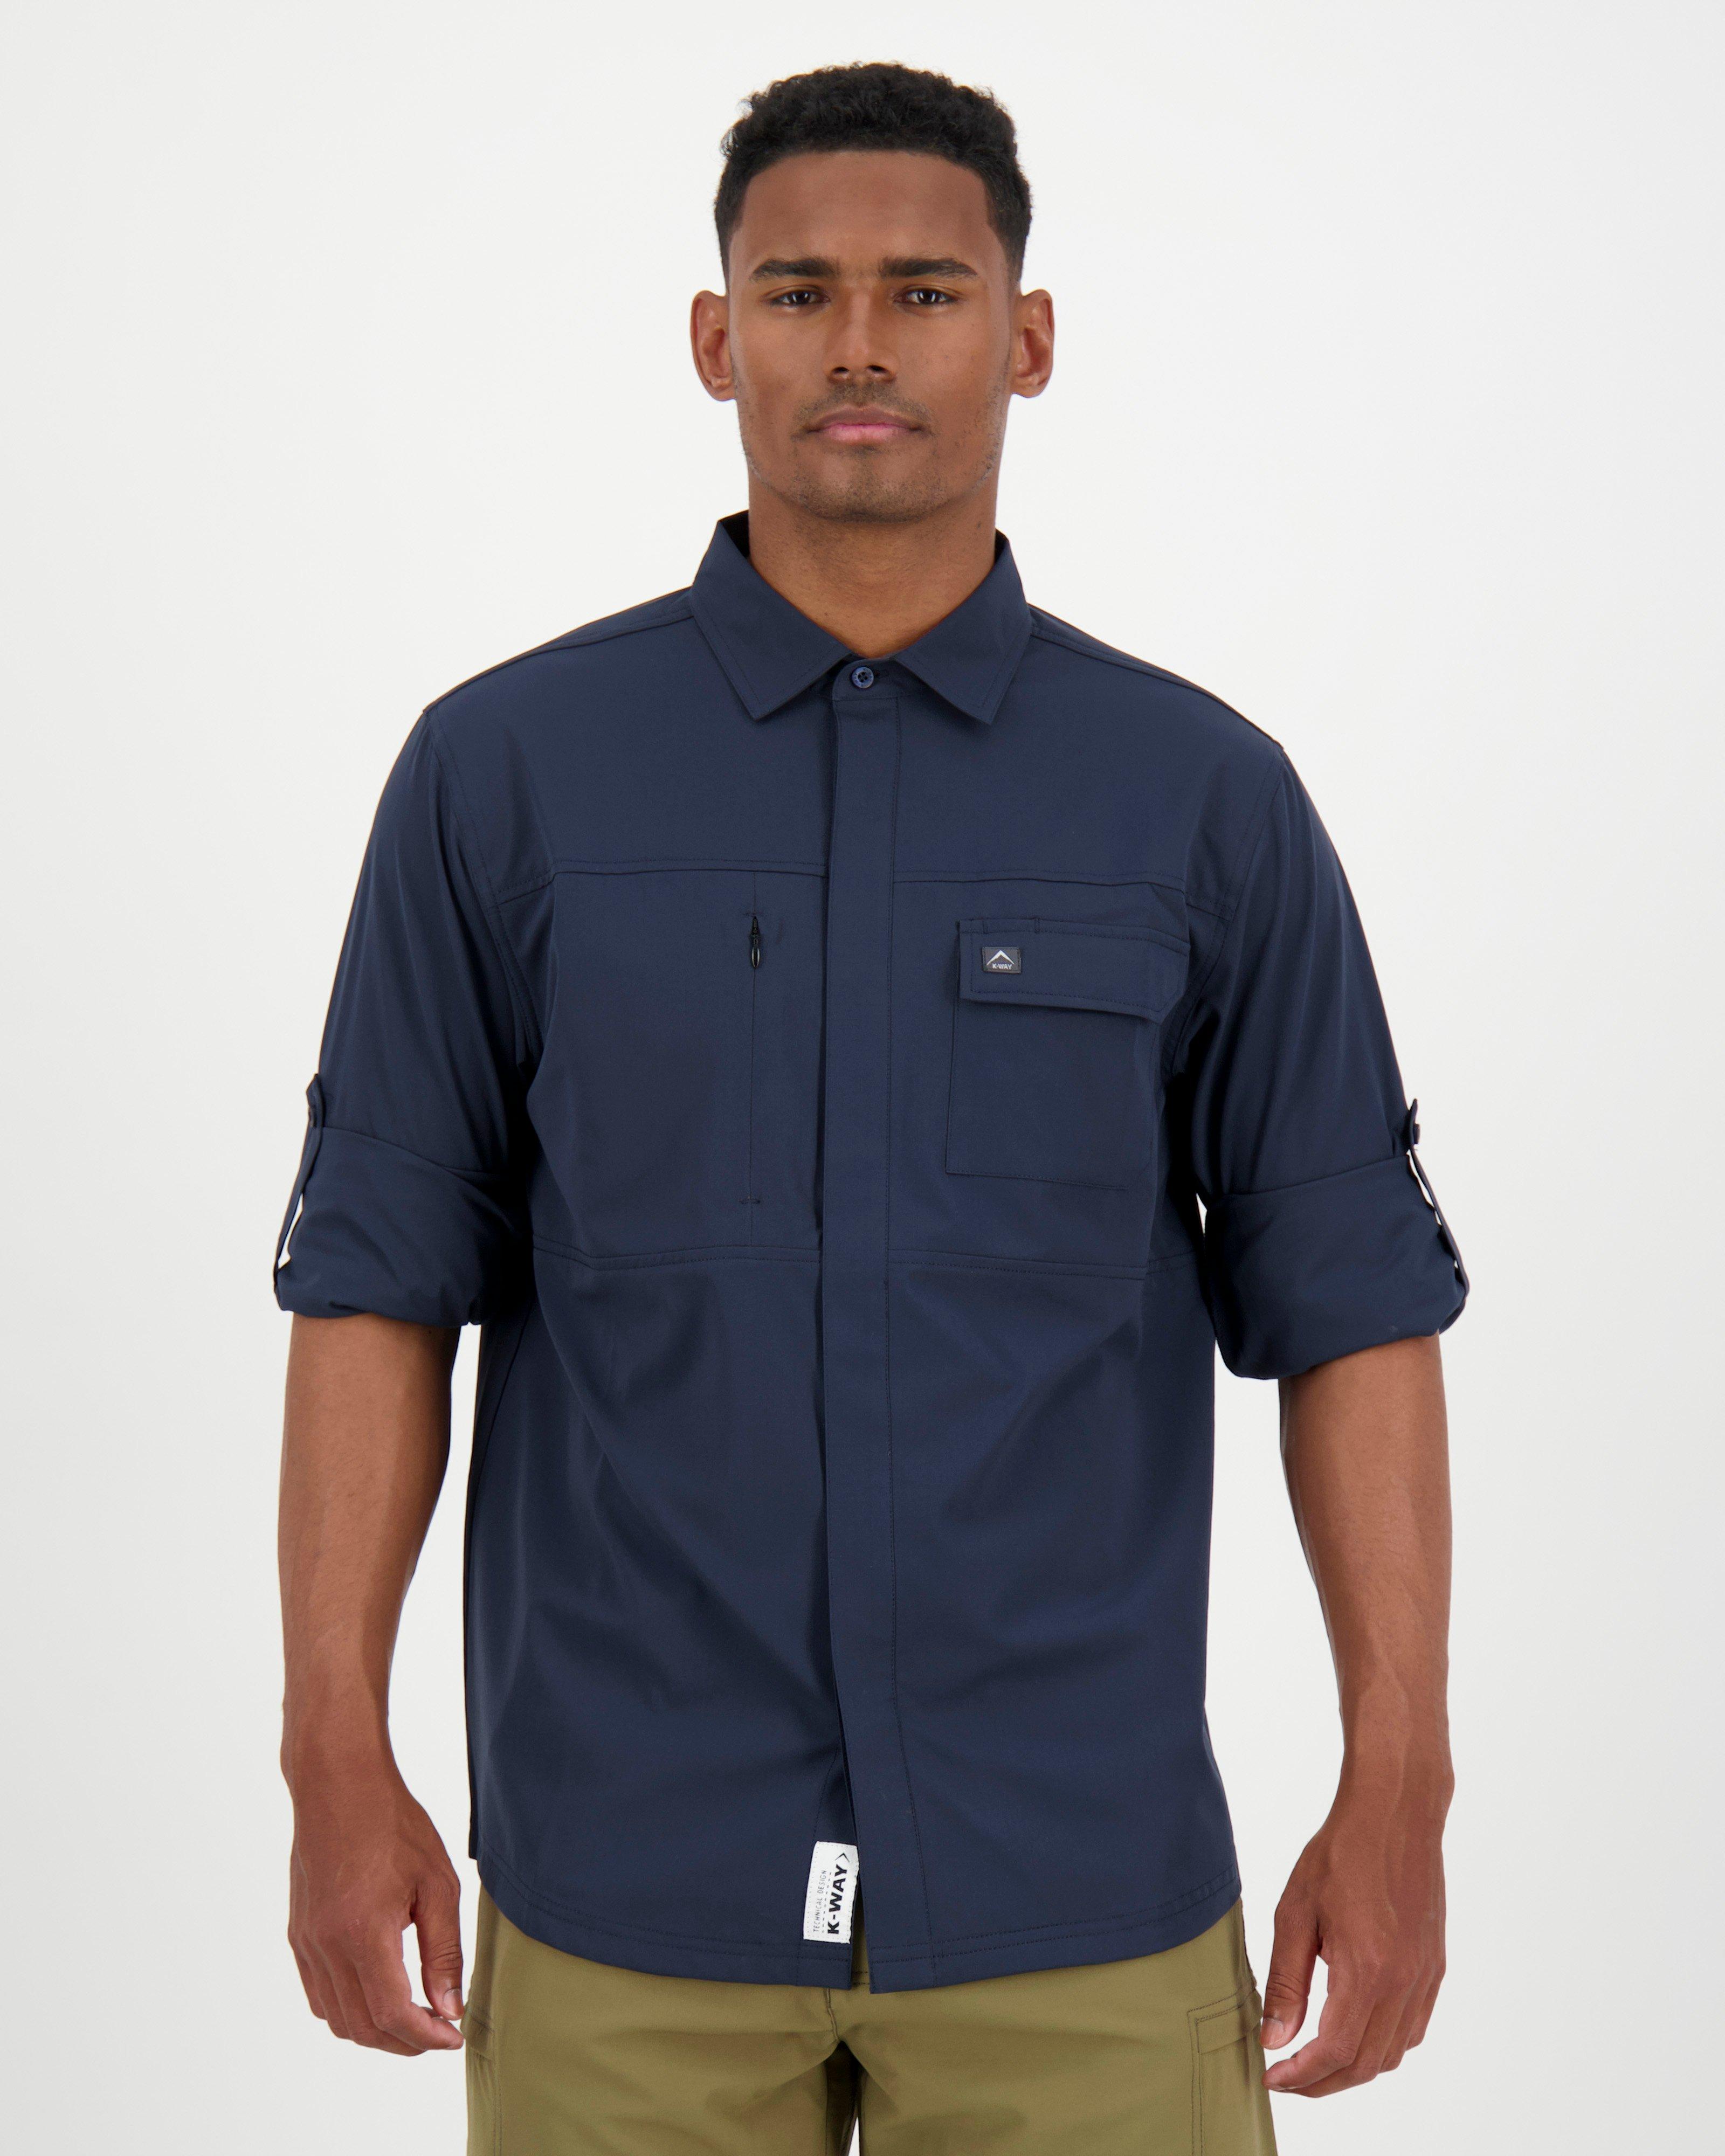 Lululemon Swiftly Tech Long Sleeve Shirt 2.0 True Navy / Iron Blue Size 10